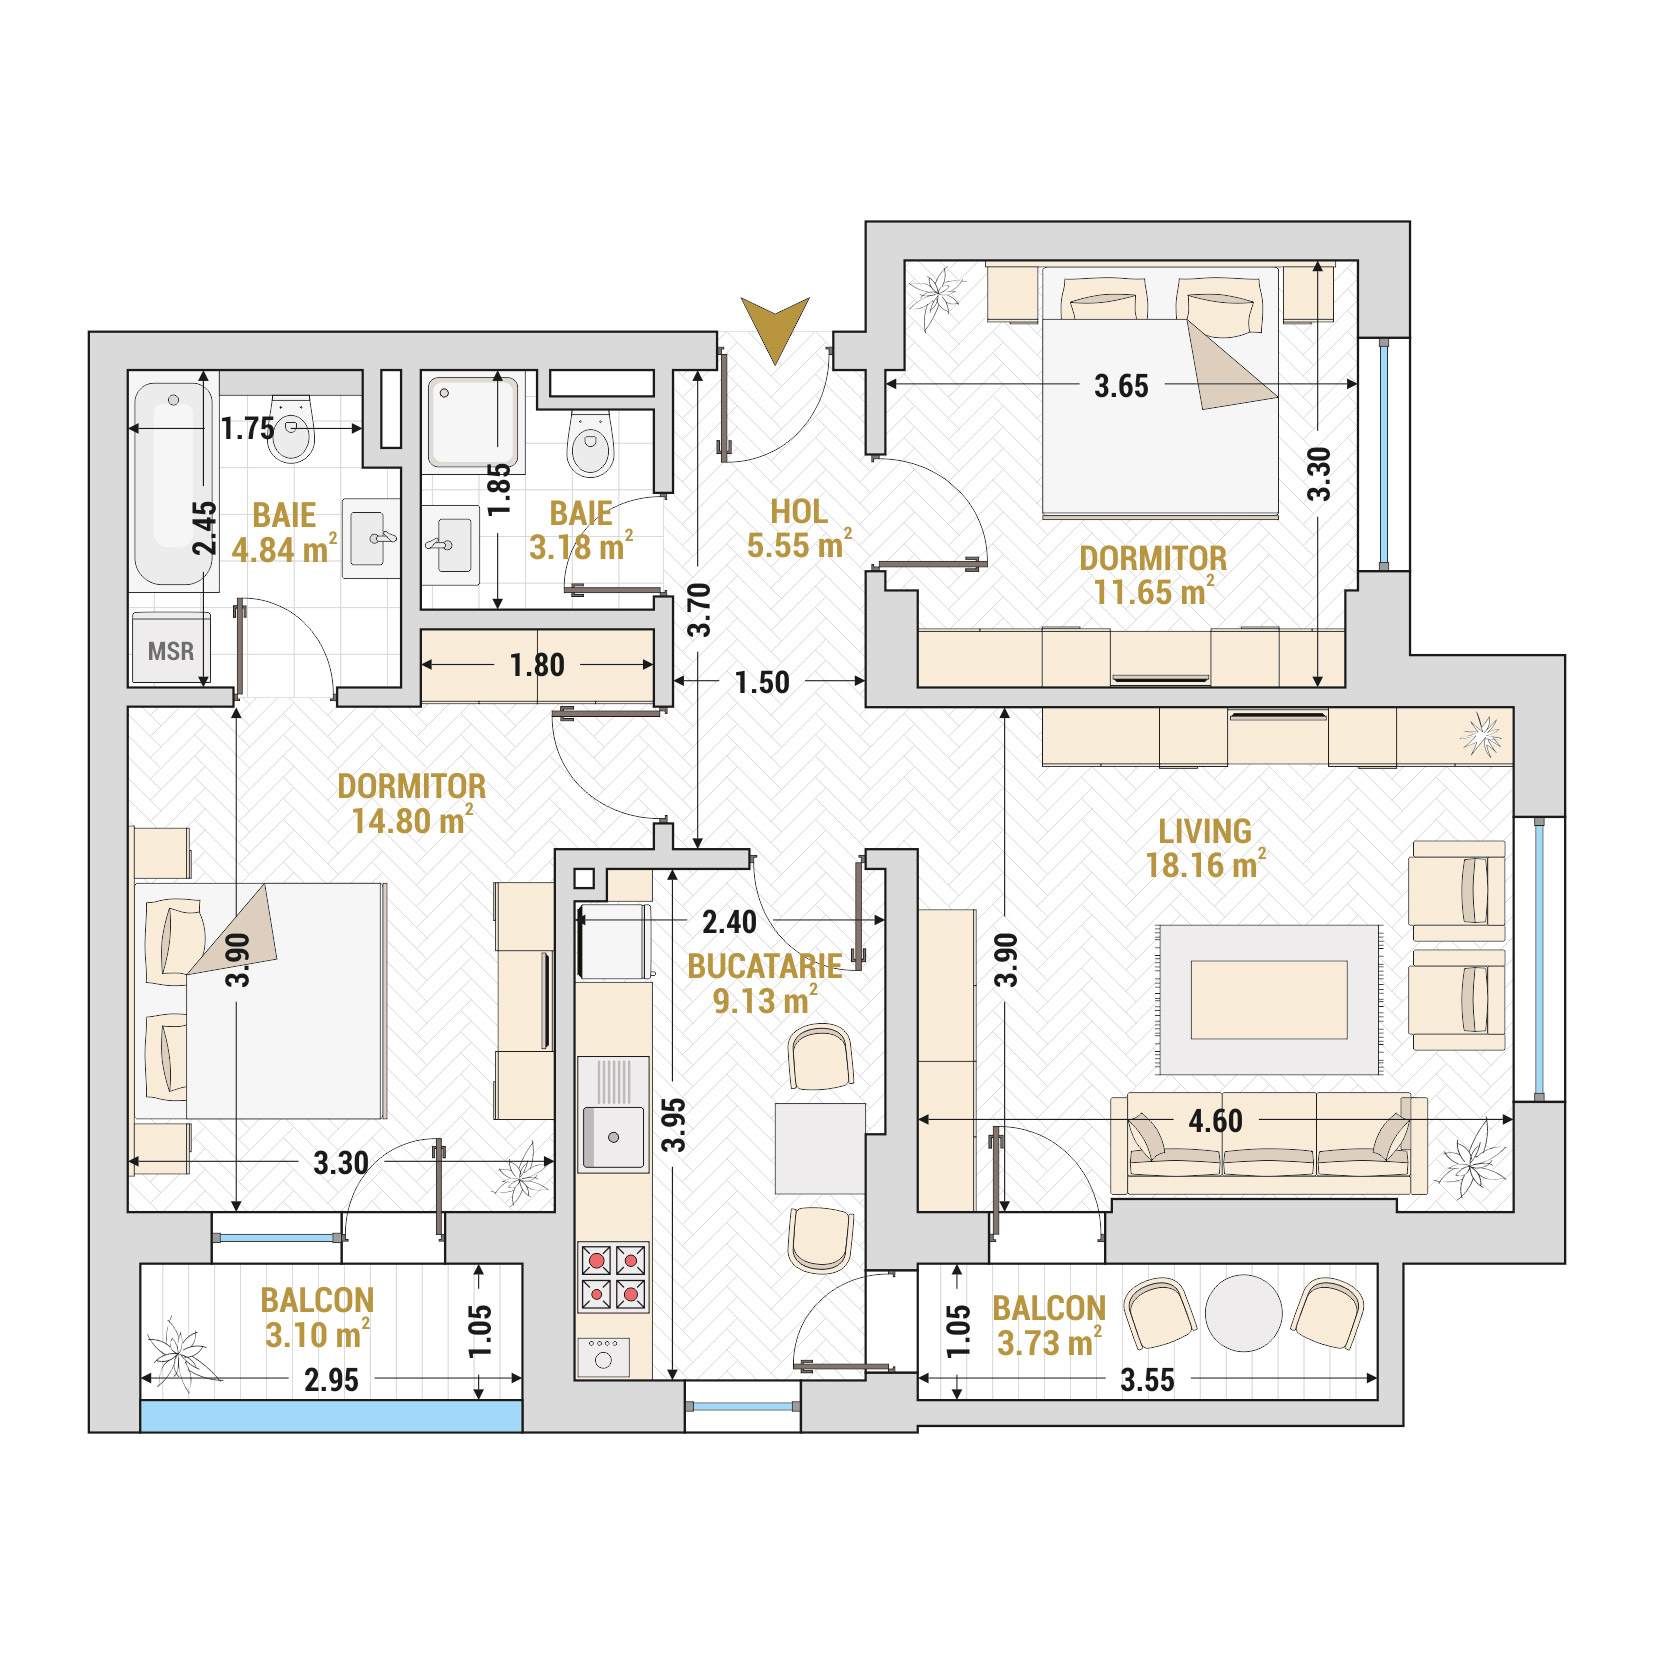 Apartament 3 Camere Tip 1 Corp 5 - Drumul Taberei Residence - Apartamente de vanzare Bucuresti - Suprafata utila totala - 74.14 mp